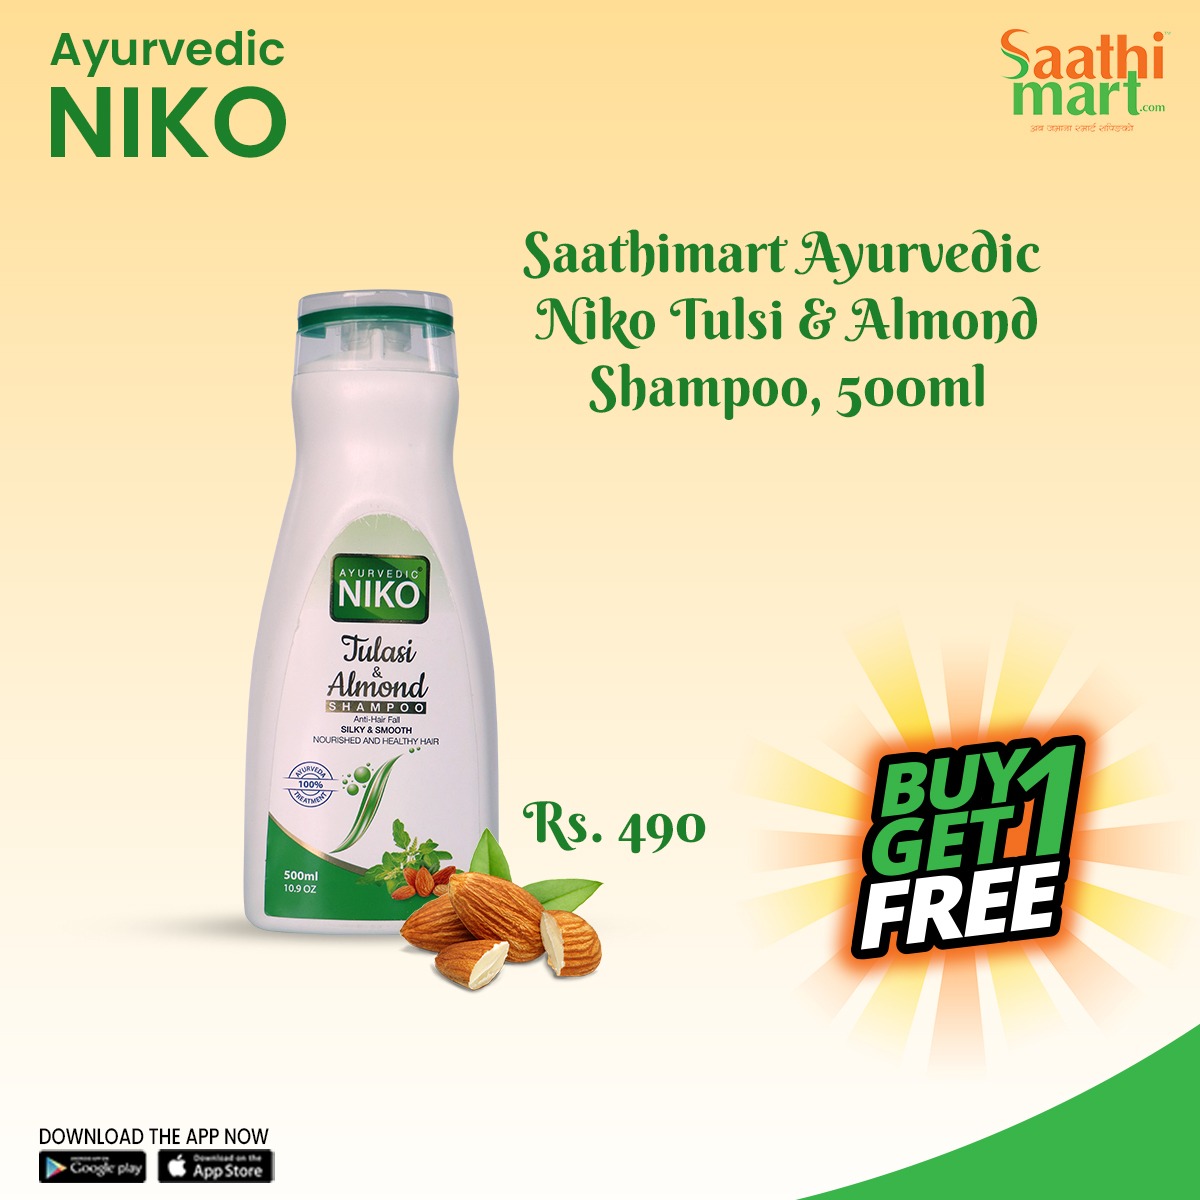 Get Nourished and Healthy Hair with - Ayurvedic Niko Tulsi & Almond Shampoo 👩
 𝗕𝗨𝗬 𝟭 𝗚𝗘𝗧 𝟭 𝗙𝗥𝗘𝗘 
#saathimart #onlineshoppingnepal #saathiproduction #Buy1Get1Free #organicproducts #niko #ayurvedic #shampoo #AntiHairFall #offers